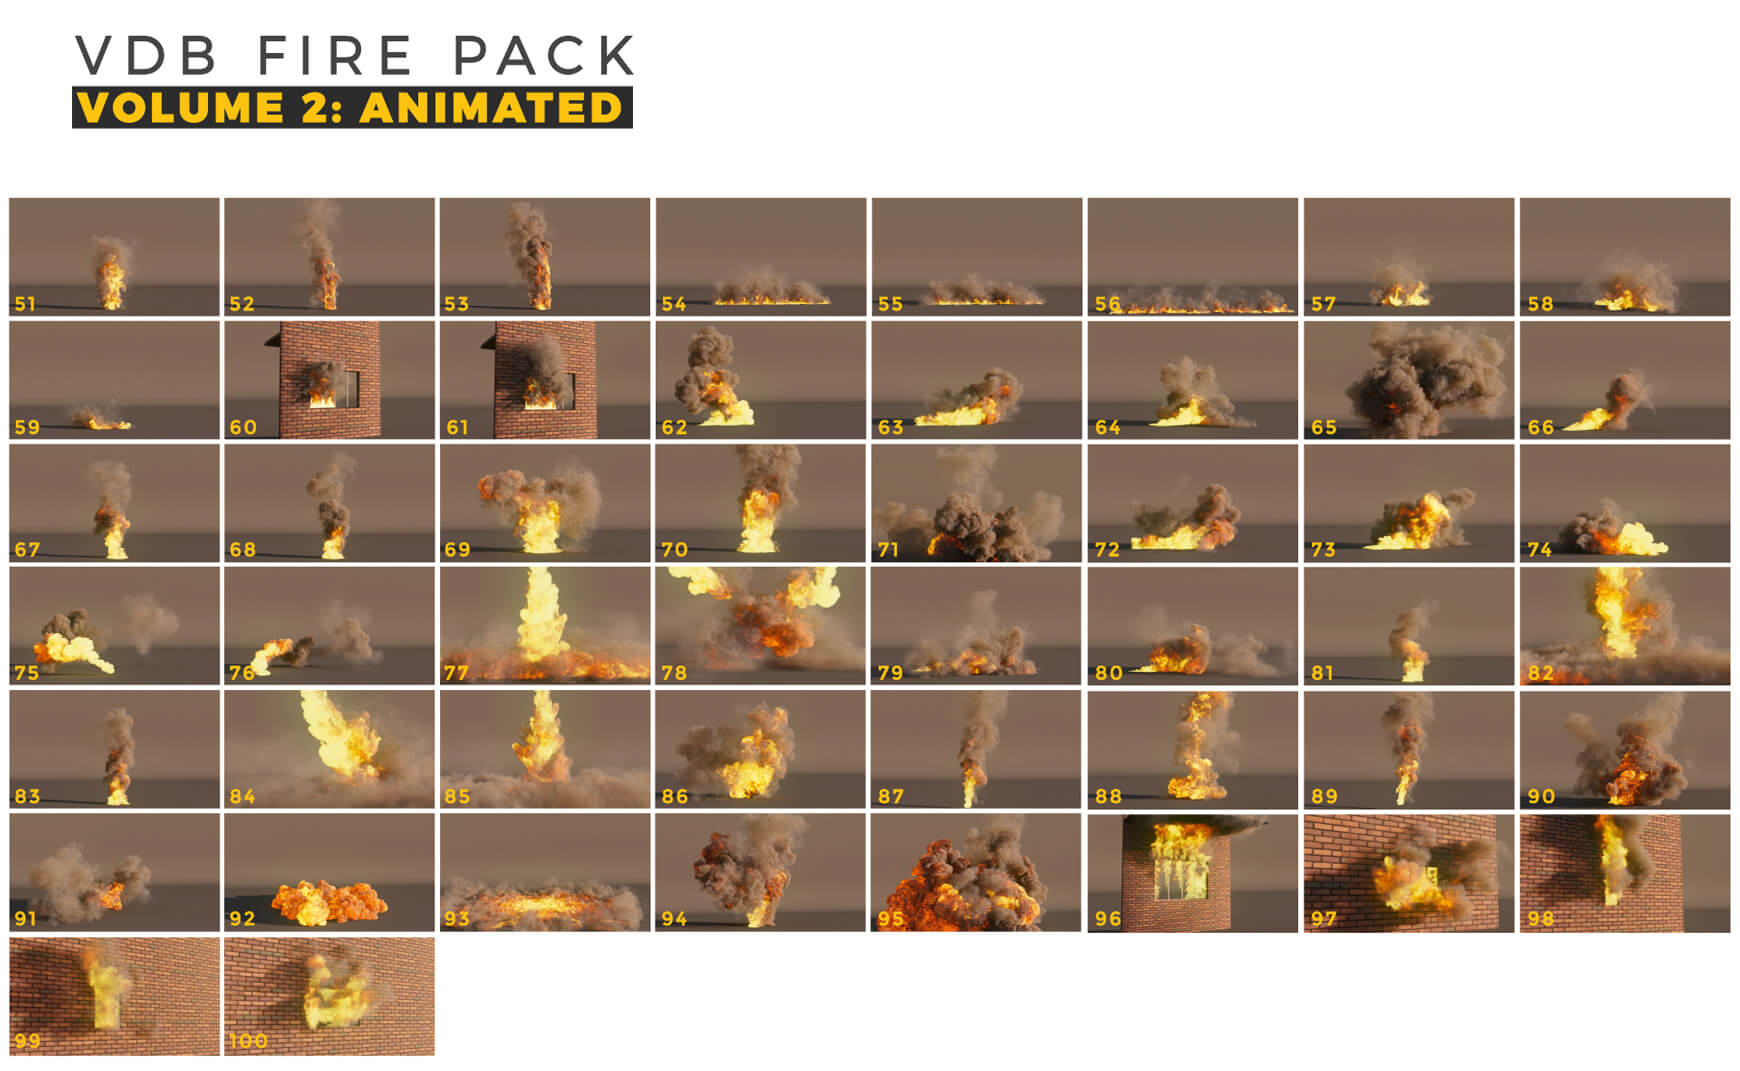 VDB Fire Pack Volume 2